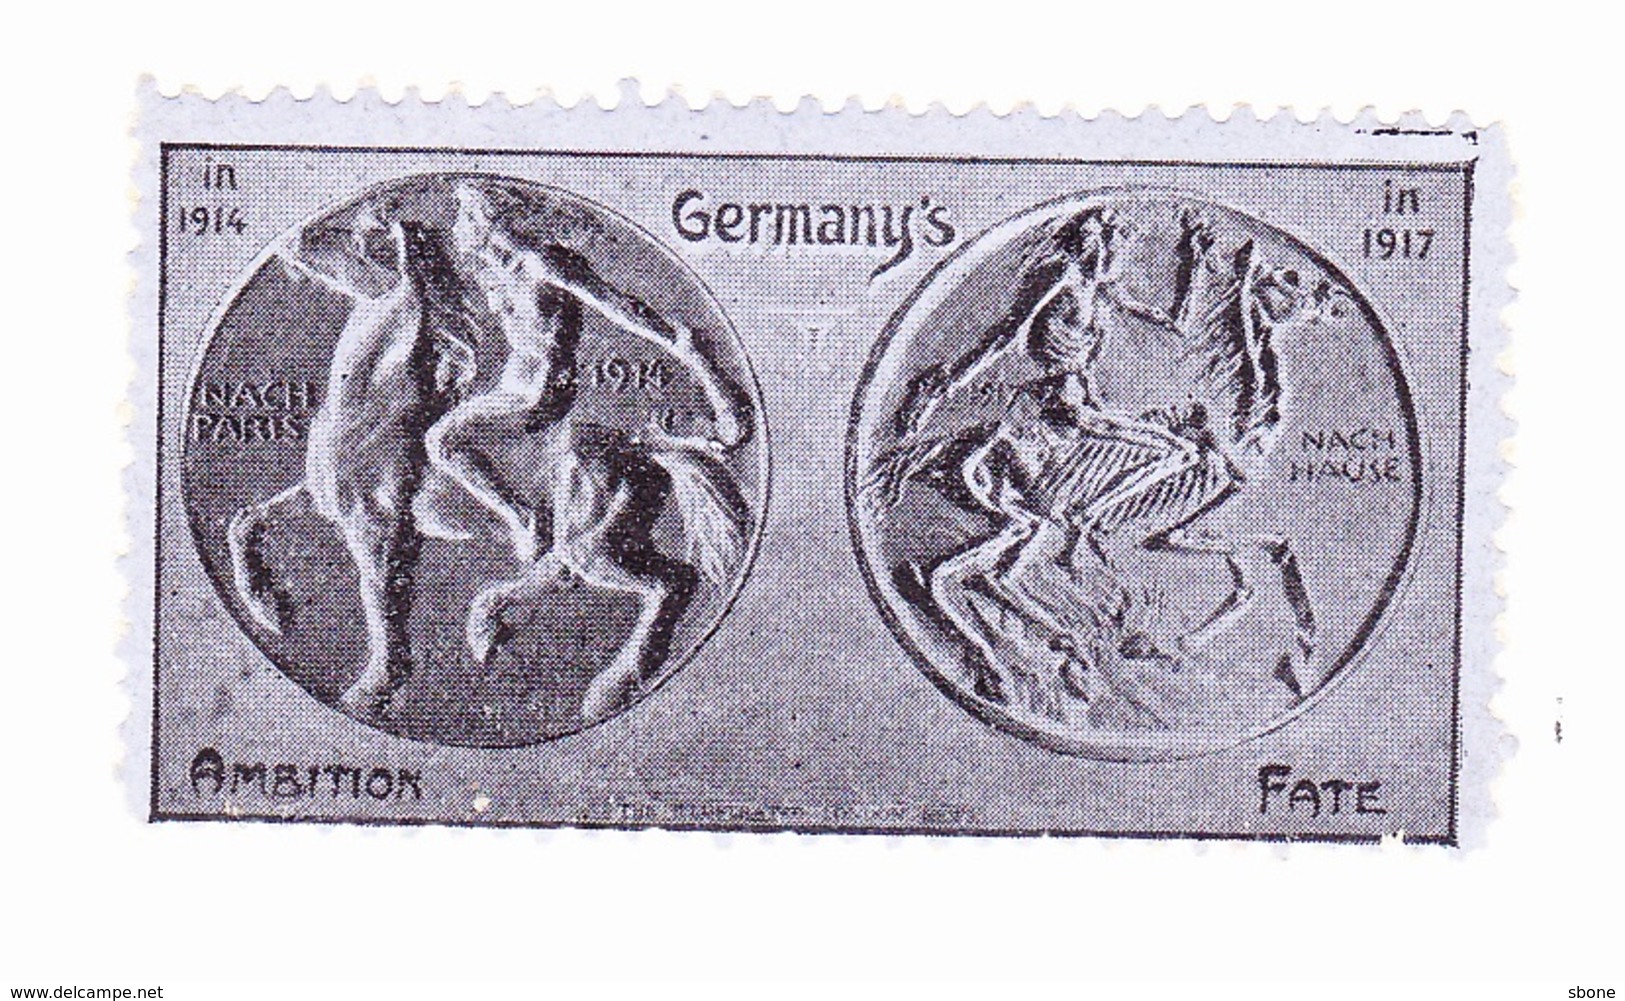 Vignette Militaire Delandre - Patriotique - Germany's - Militärmarken